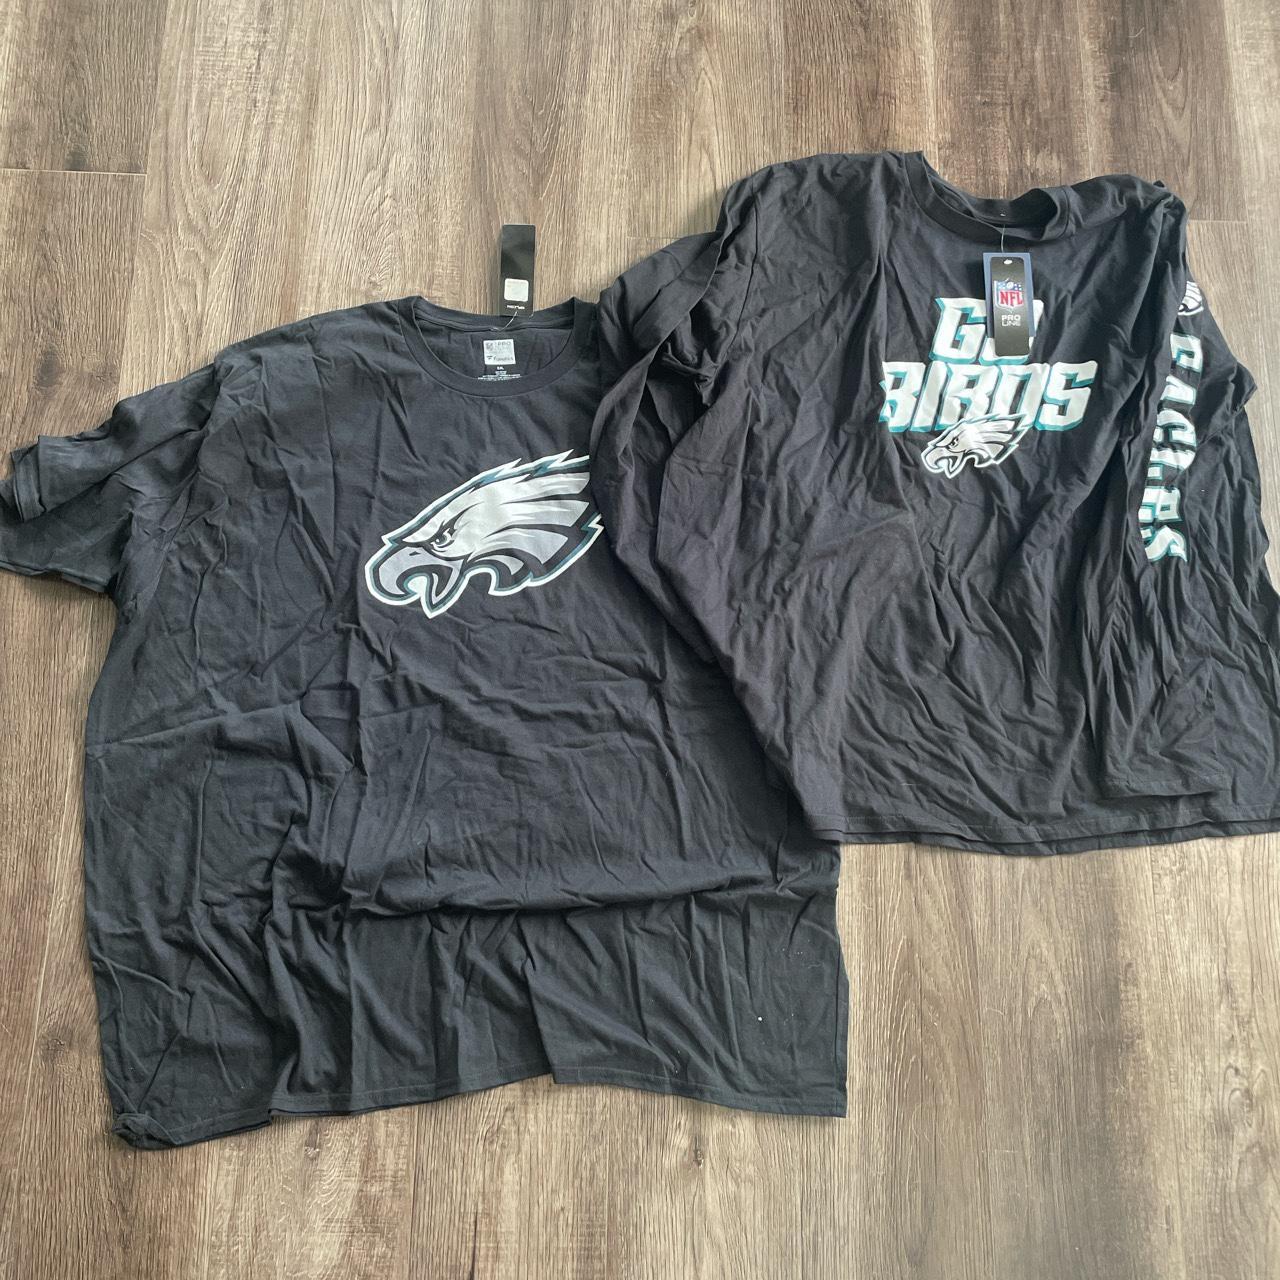 Cheap Logo NFL Football Philadelphia Eagles T Shirt Mens